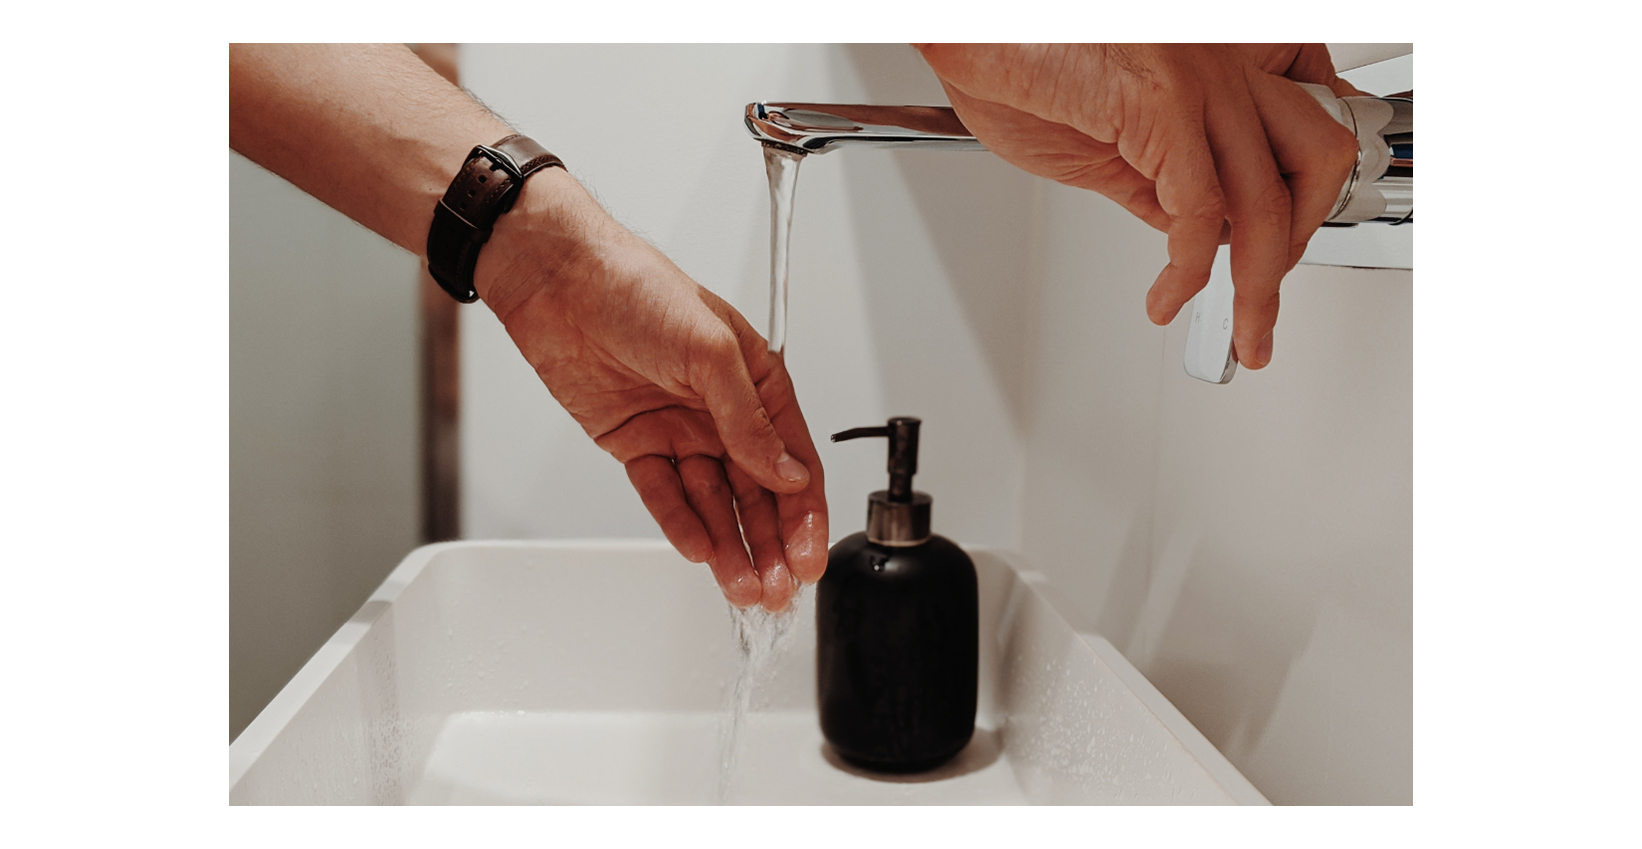 A man washing his hands in a bathroom sink